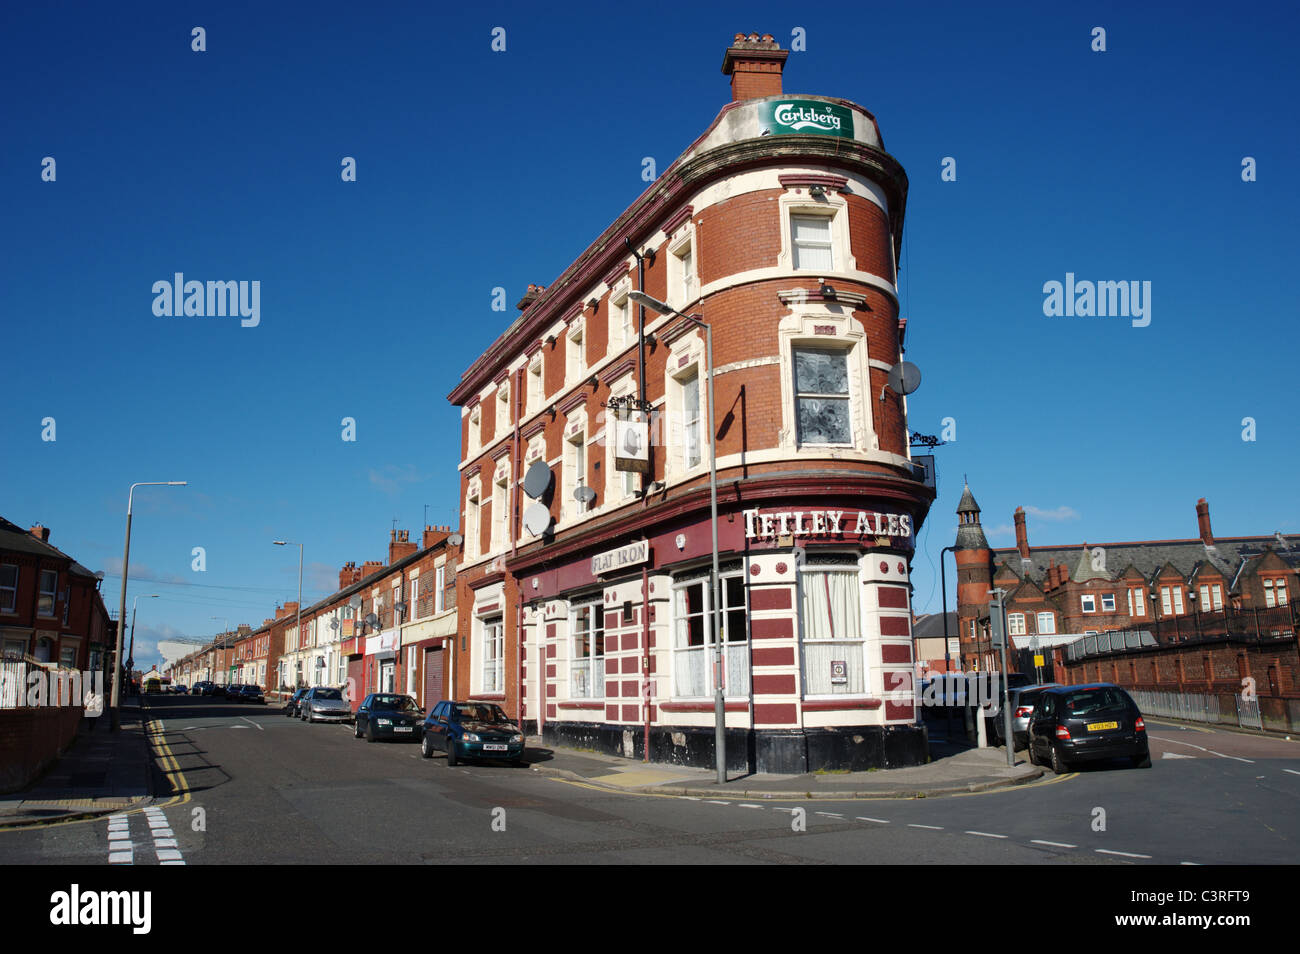 Flat Iron pub, public house. 375-377 Walton Breck Rd Anfield Liverpool L4 0SY England, UK. Stock Photo